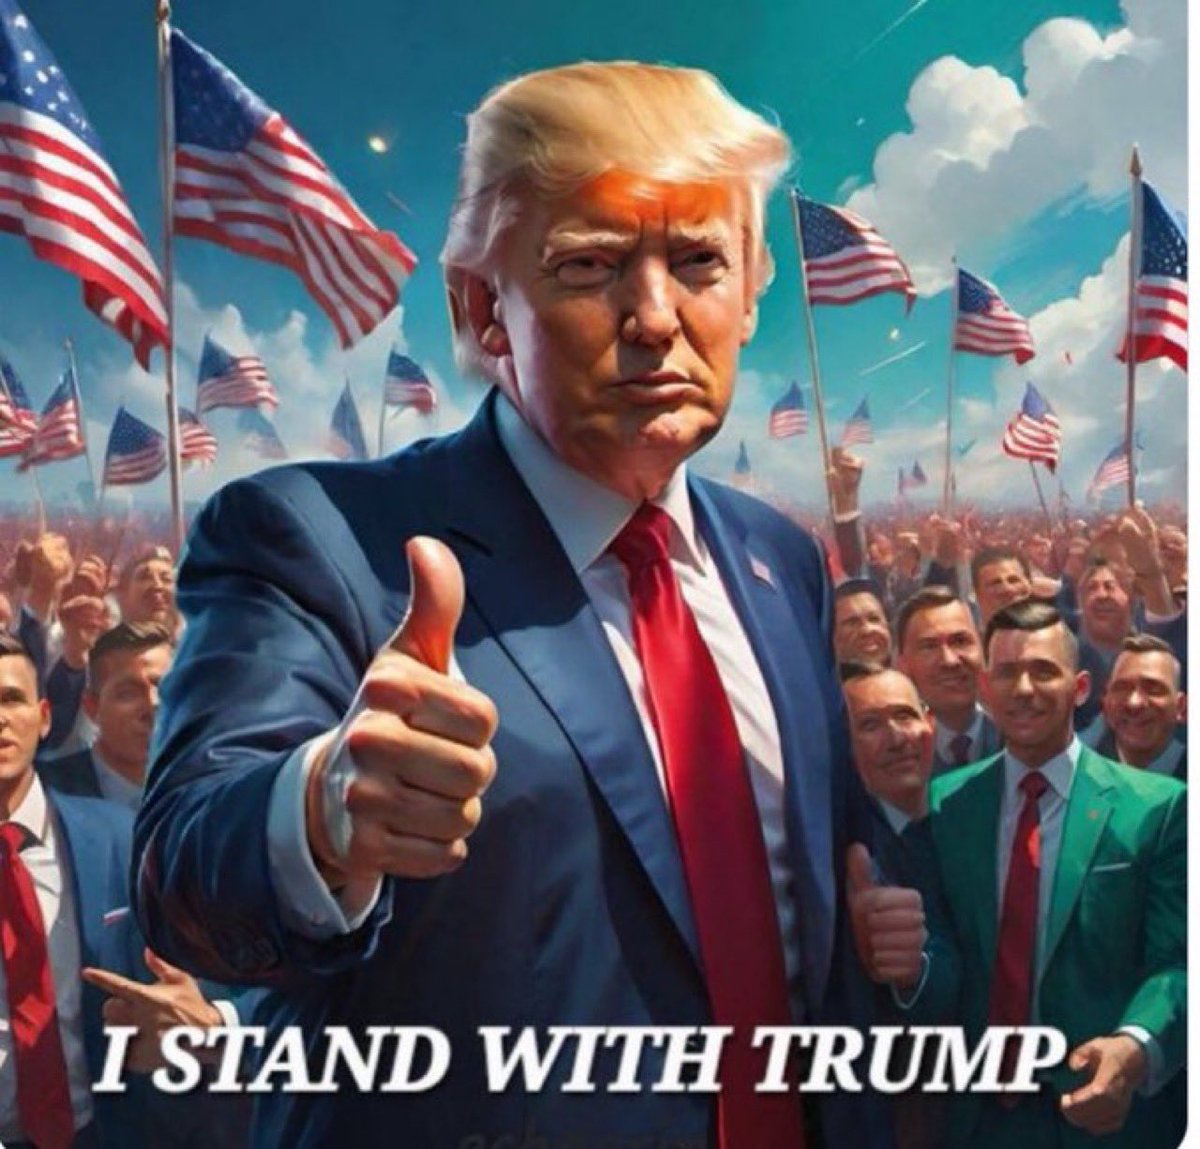 I STAND WITH TRUMP! #VoteTrumpToSaveAmerica